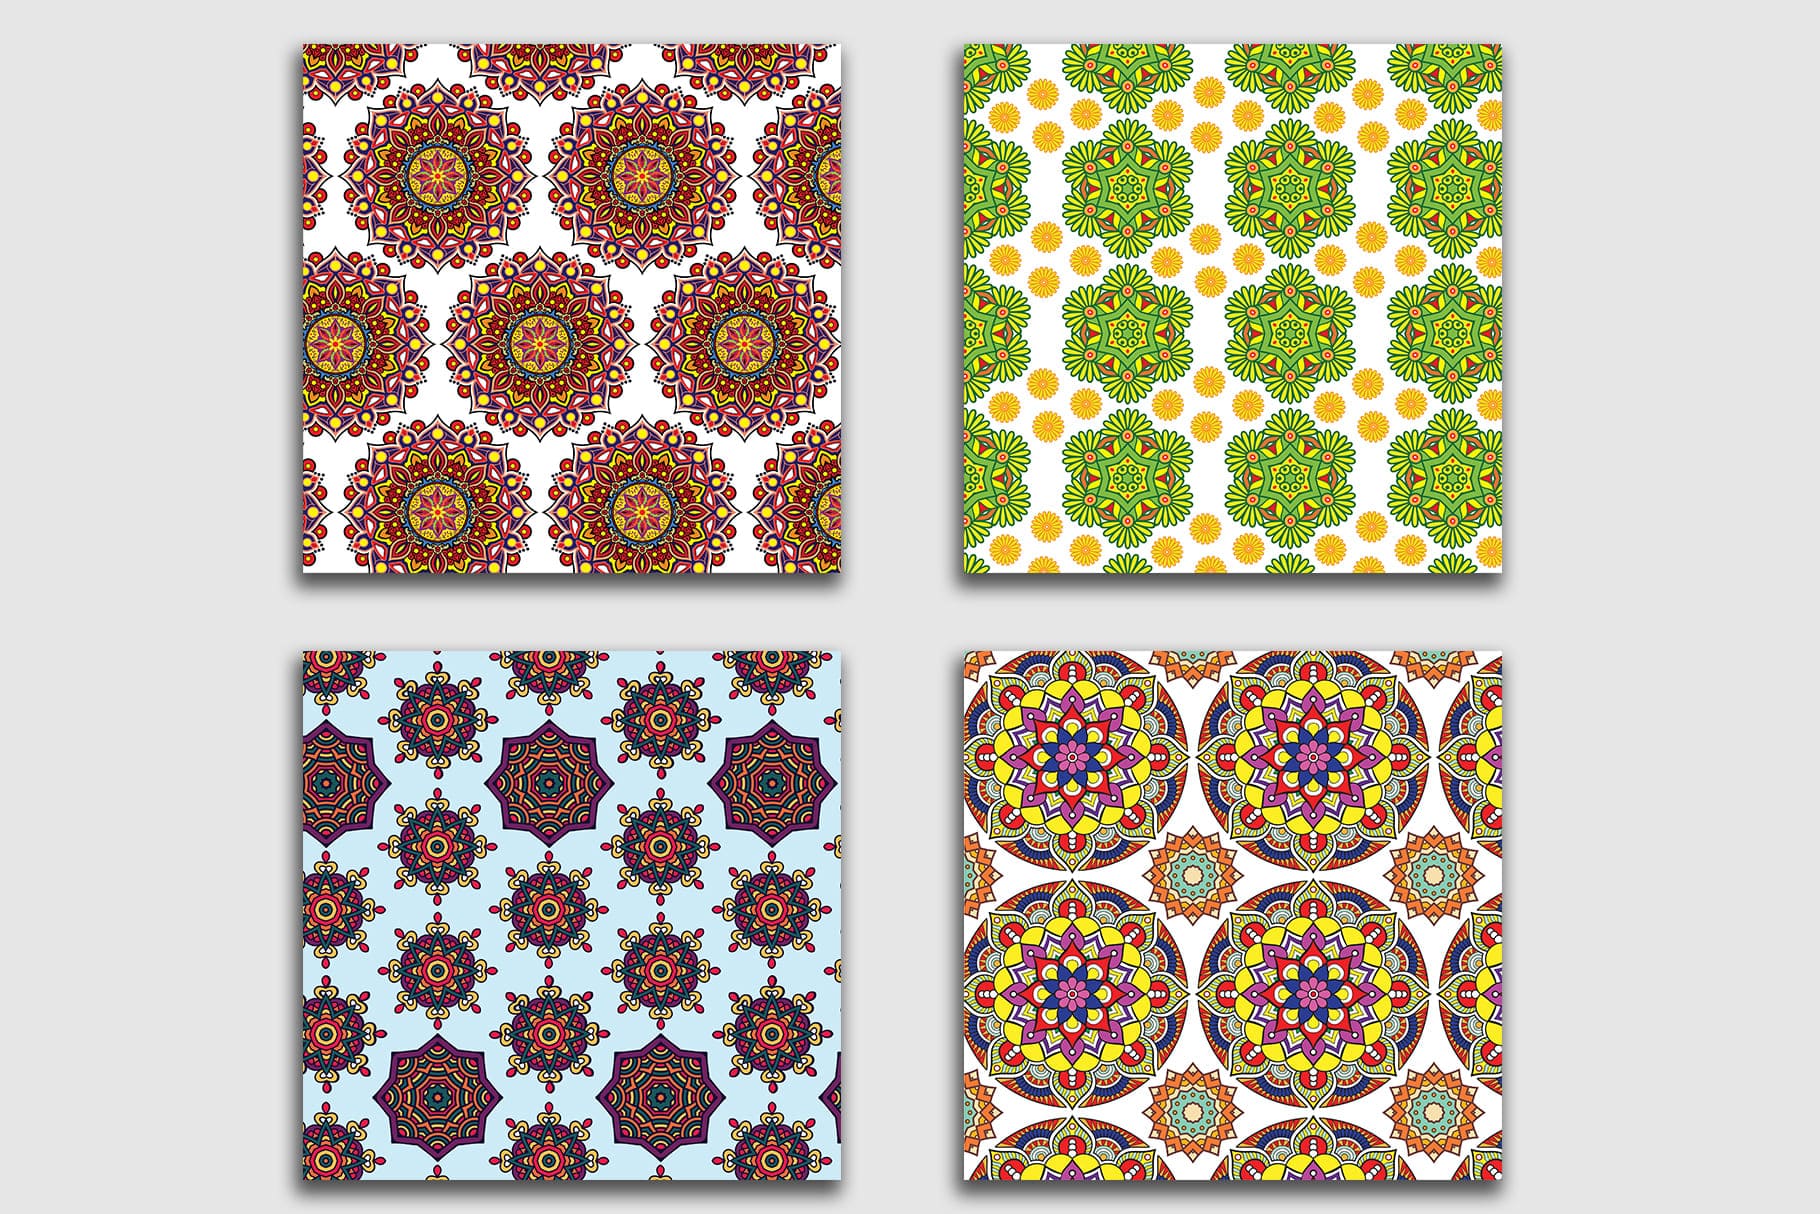 Stylish tiles depicting different types of mandalas.